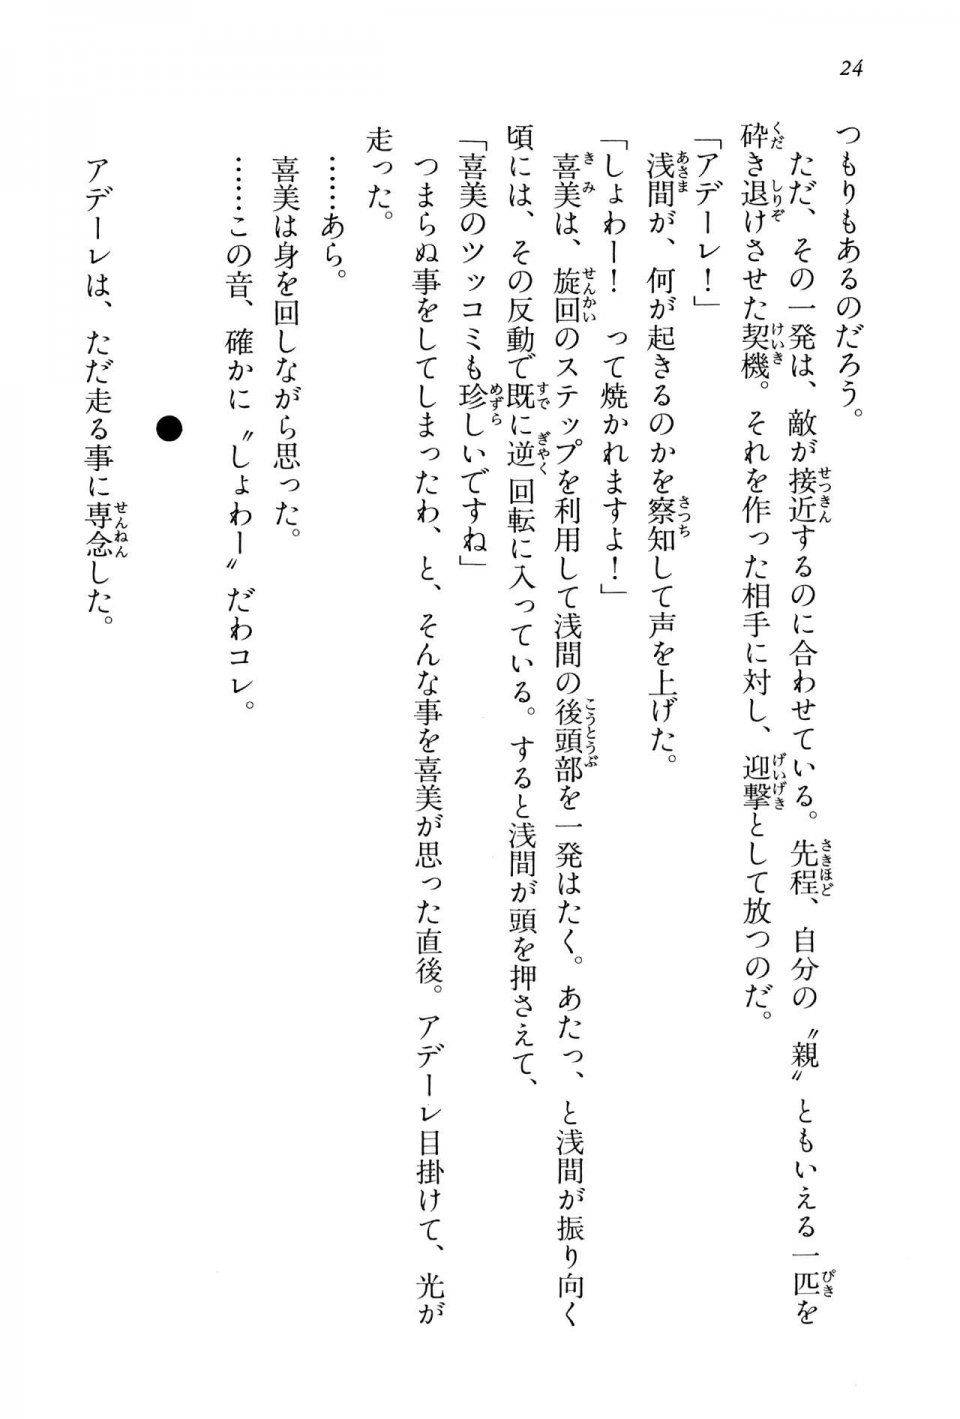 Kyoukai Senjou no Horizon BD Special Mininovel Vol 4(2B) - Photo #28